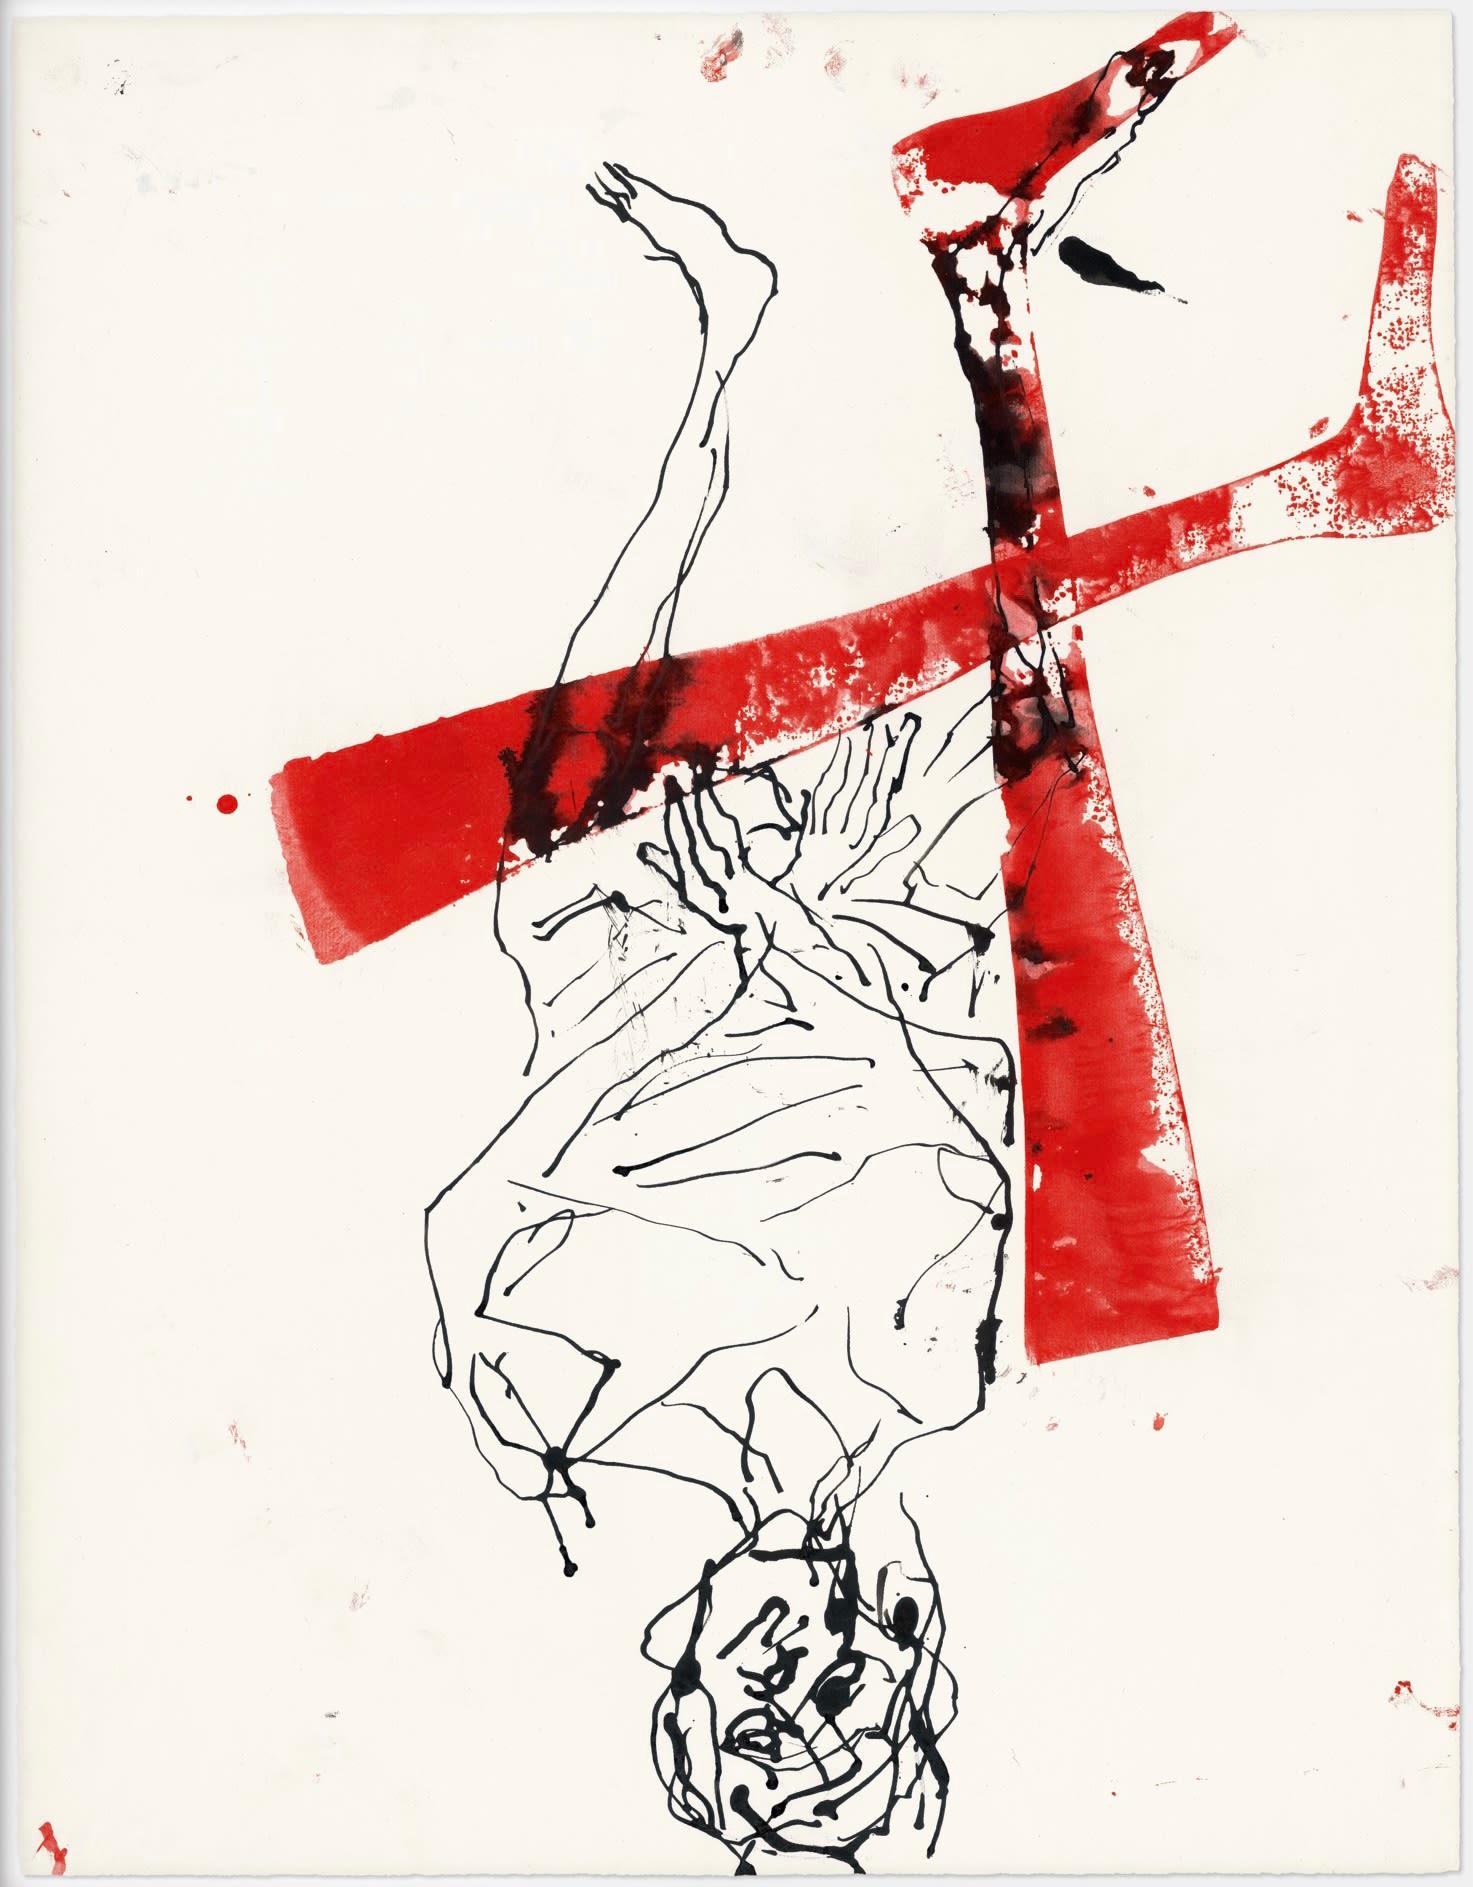 Hannahs Beine, Georg Baselitz, Neo Expressionism, Contemporary Art 2